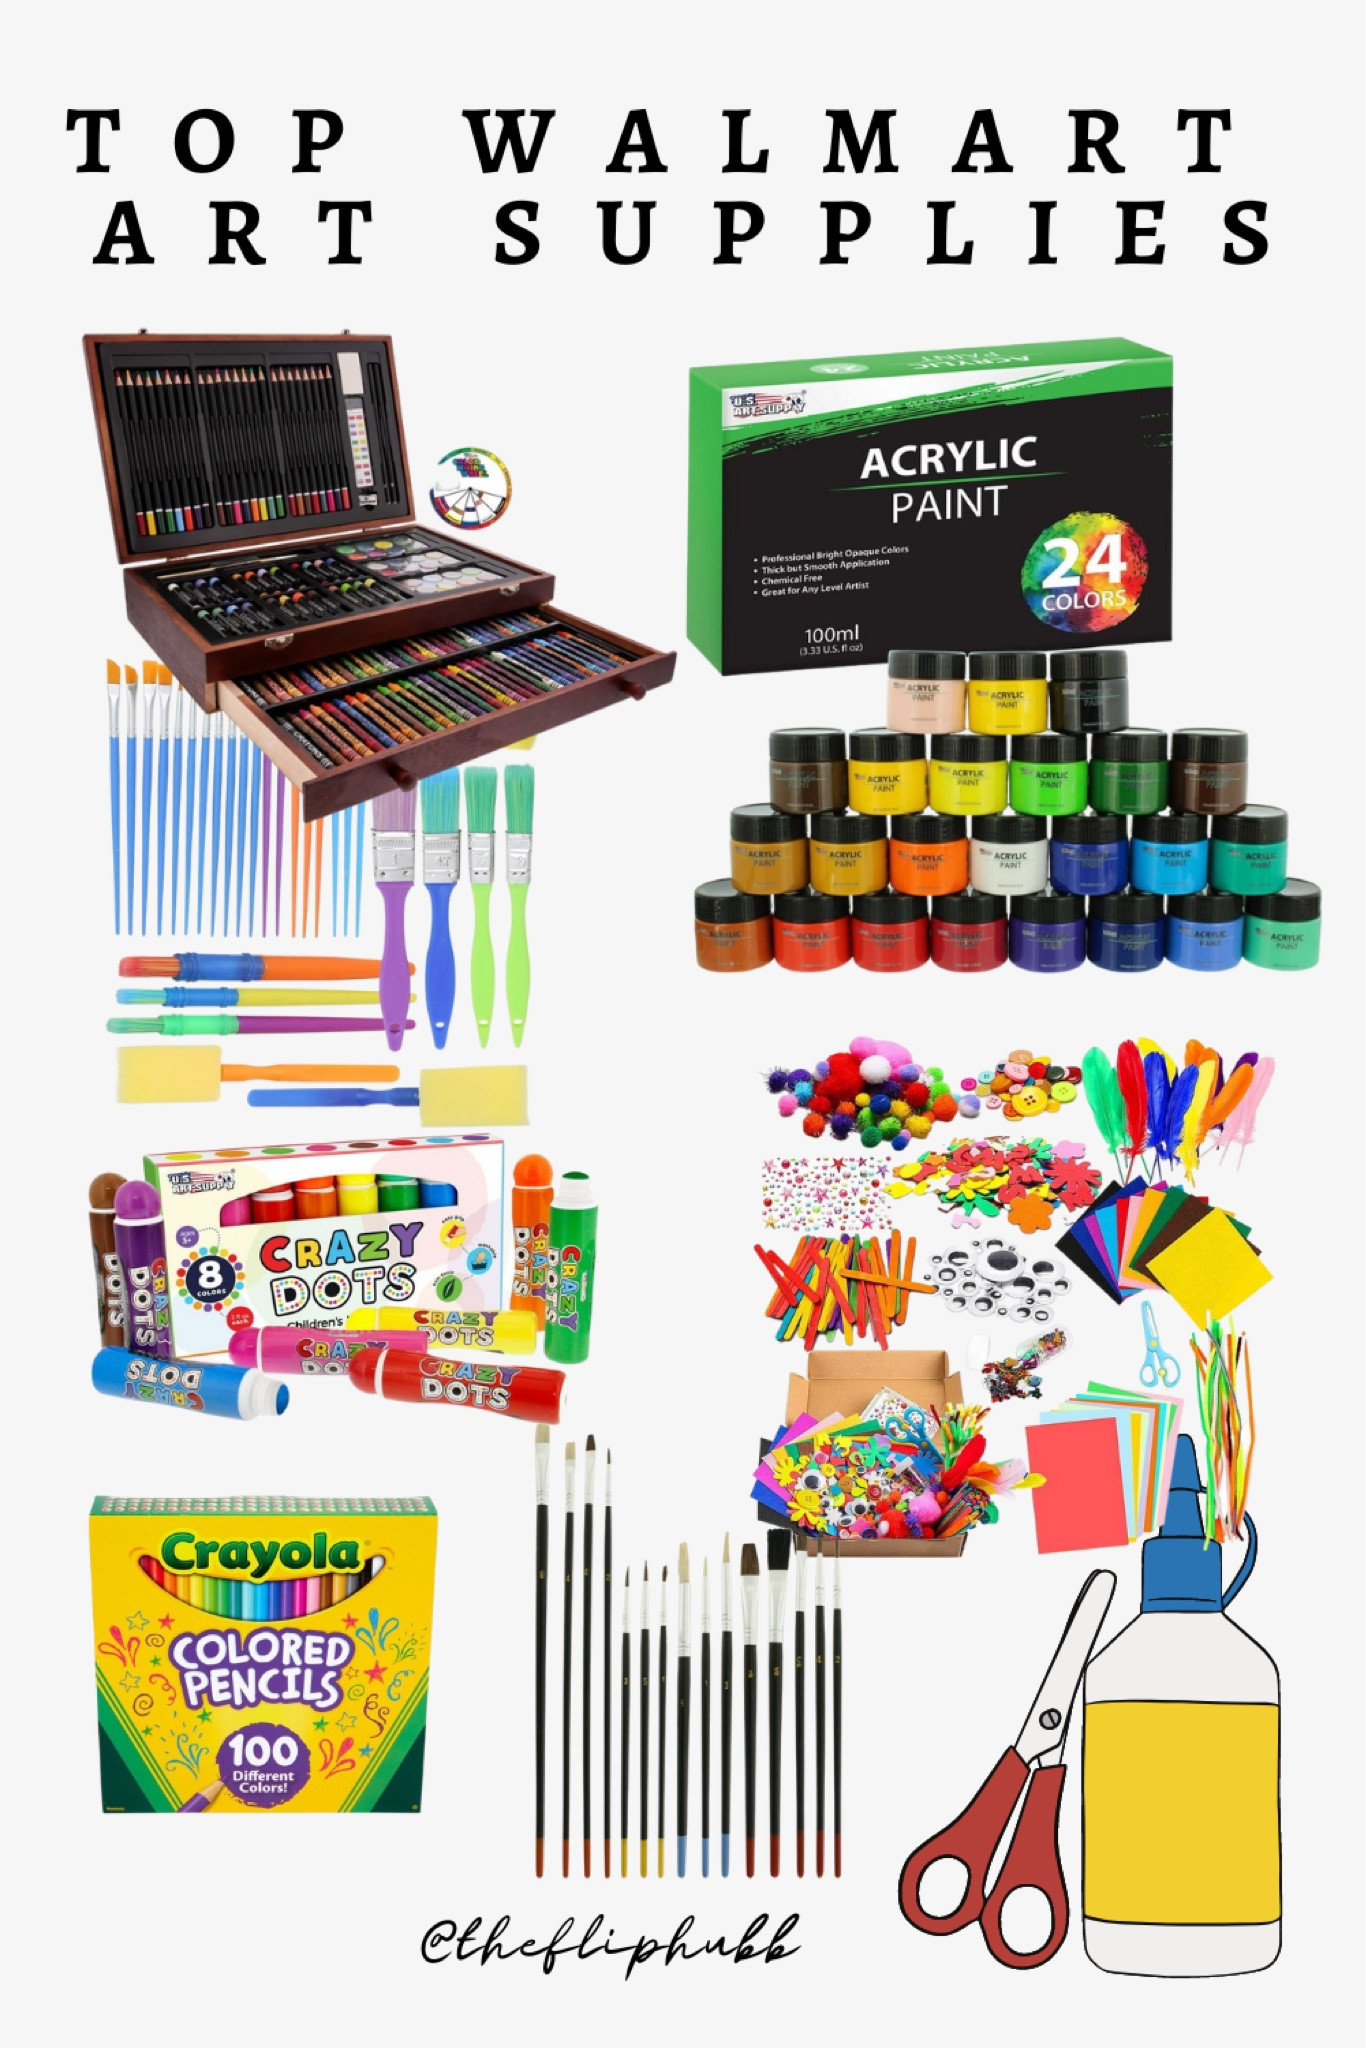 Crayola Colored Pencils Set, Back to School Supplies, 100 Ct